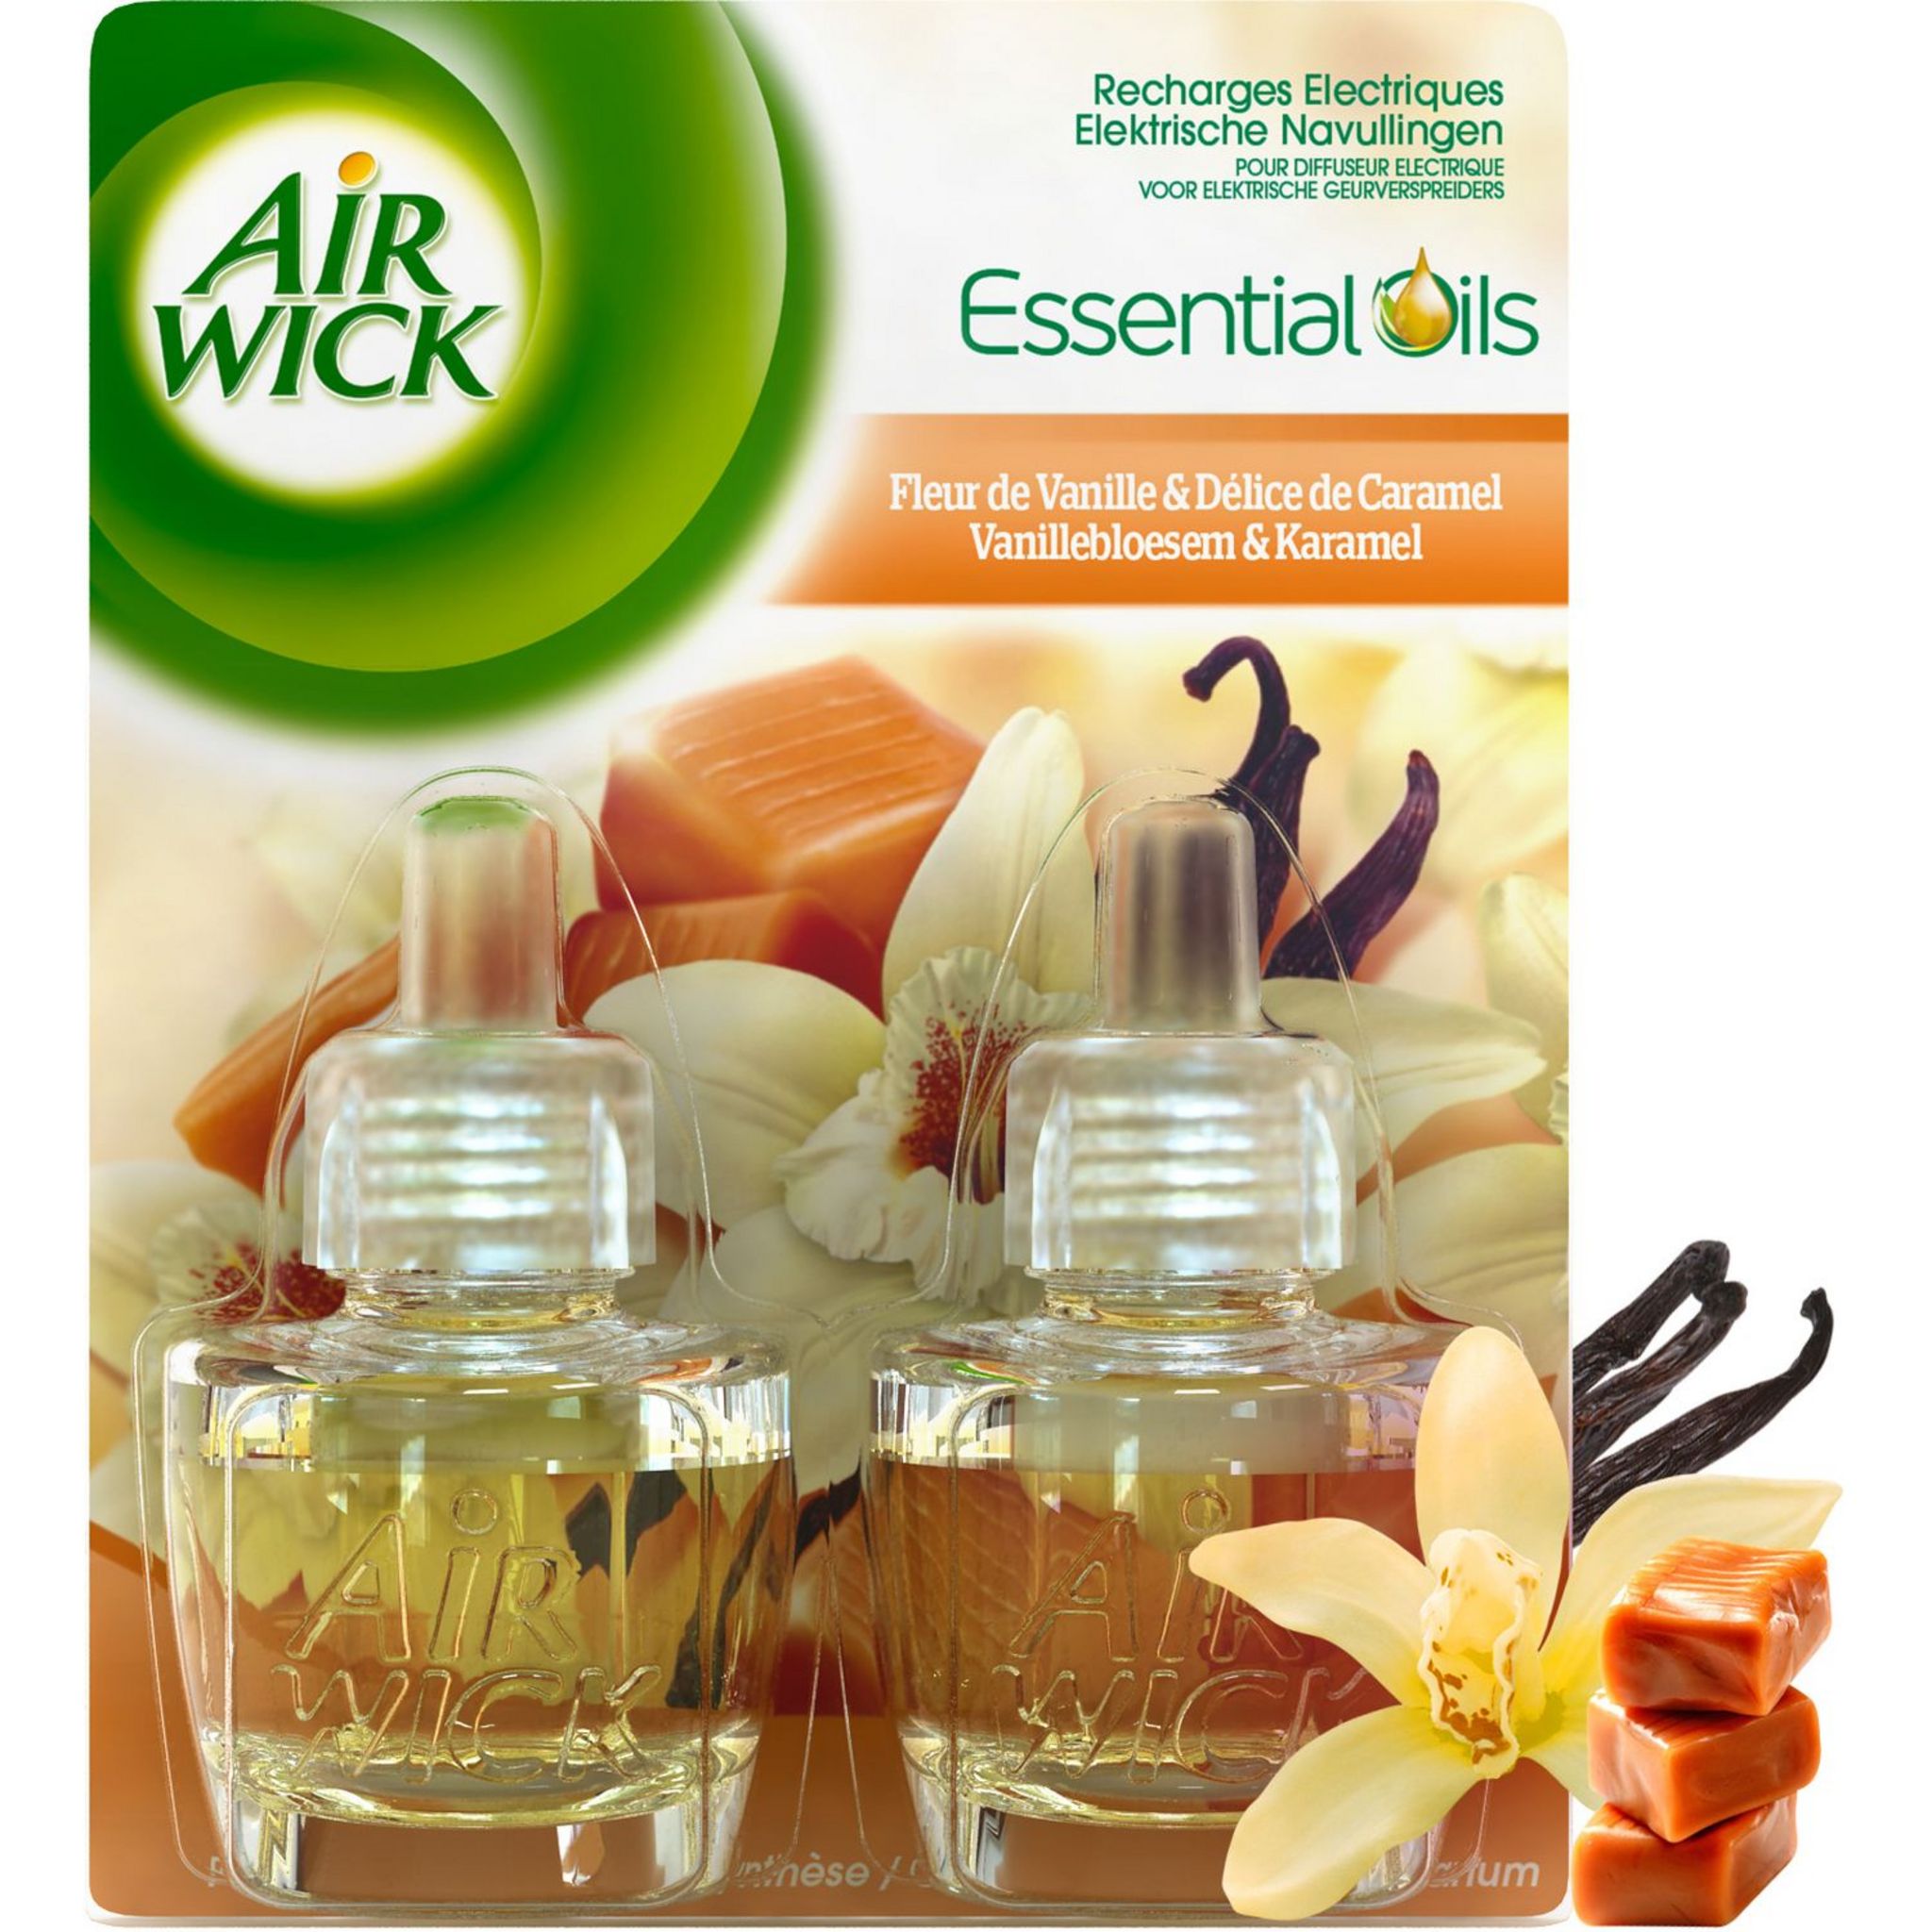 Air Wick automatique pour diffuseur d'arômes Air Wick Essential